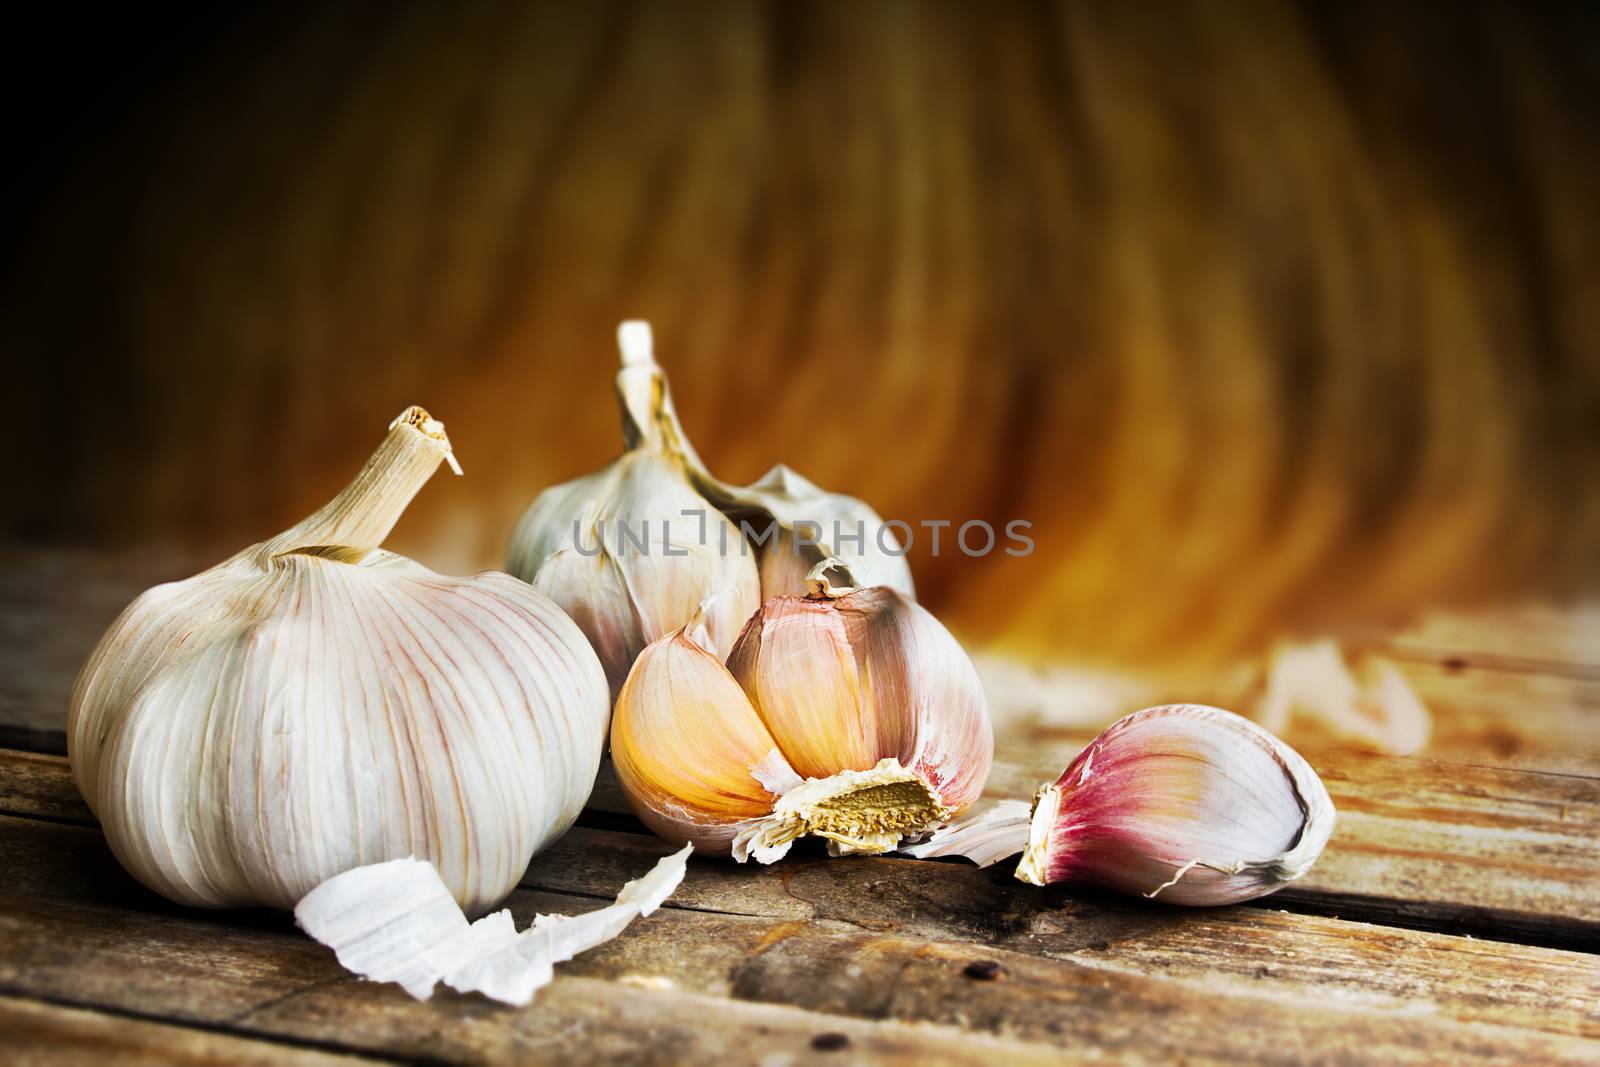 Vintage garlic in still life style